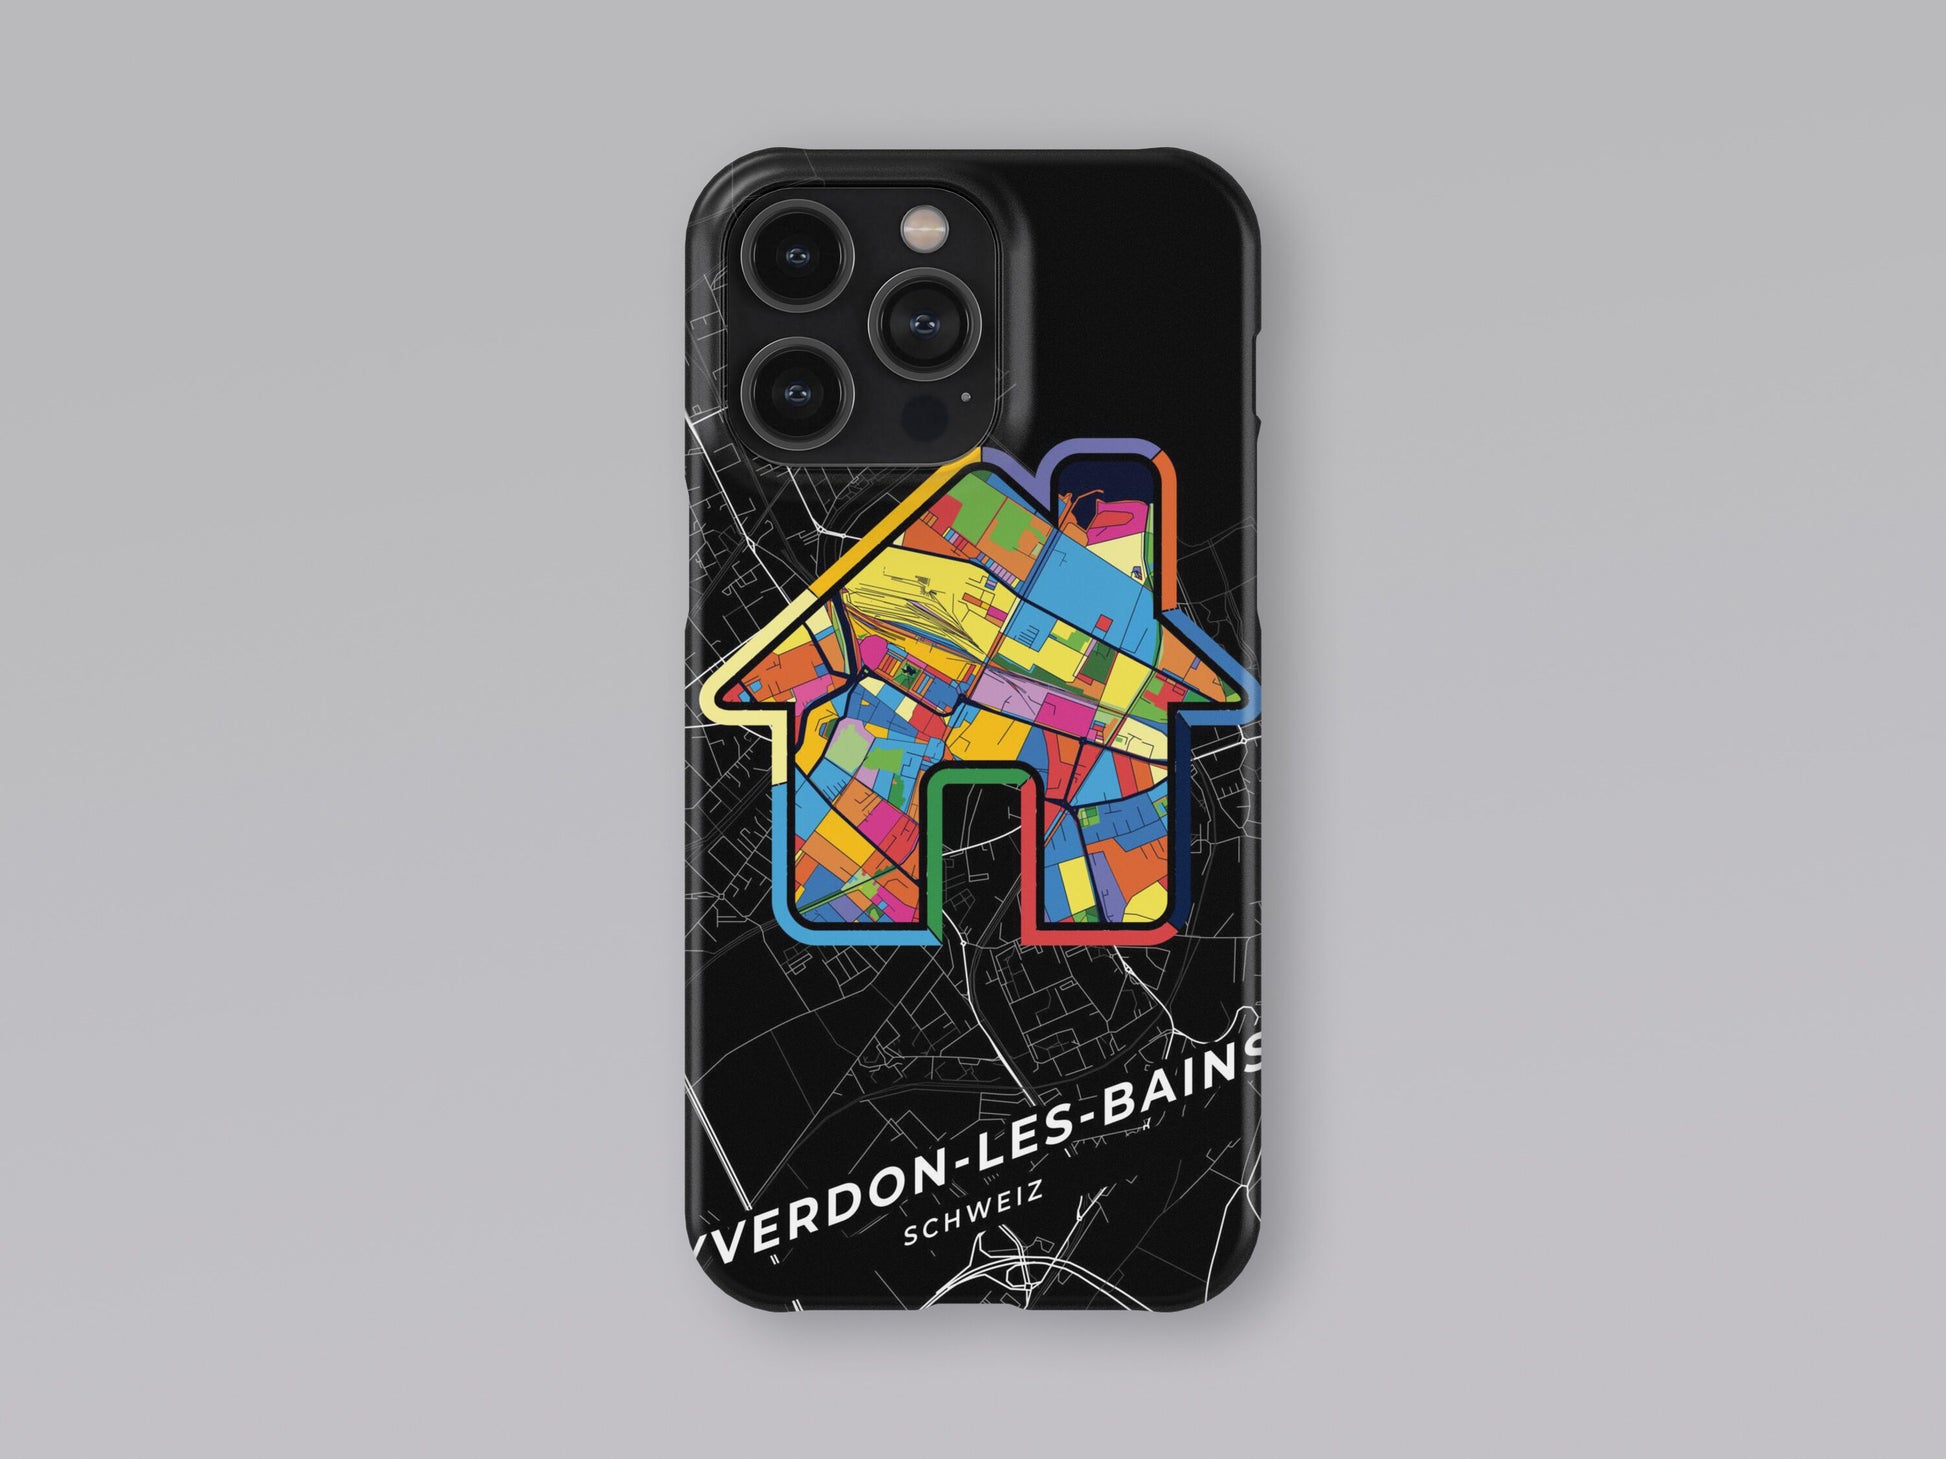 Yverdon-Les-Bains Switzerland slim phone case with colorful icon 3